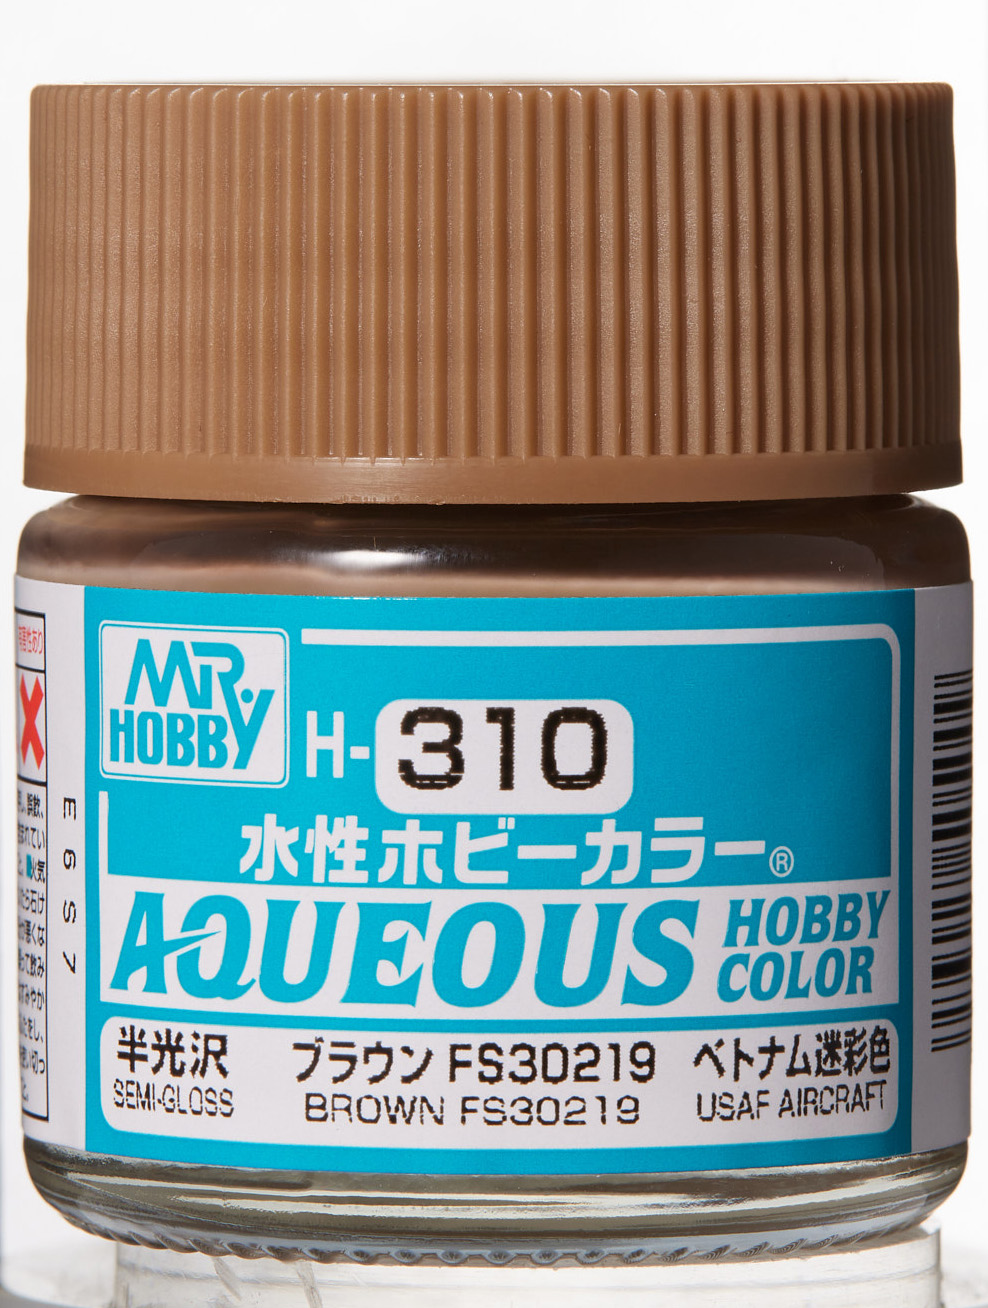 Mr. Aqueous Hobby Color - Brown FS30219 - H310 - Braun FS30219